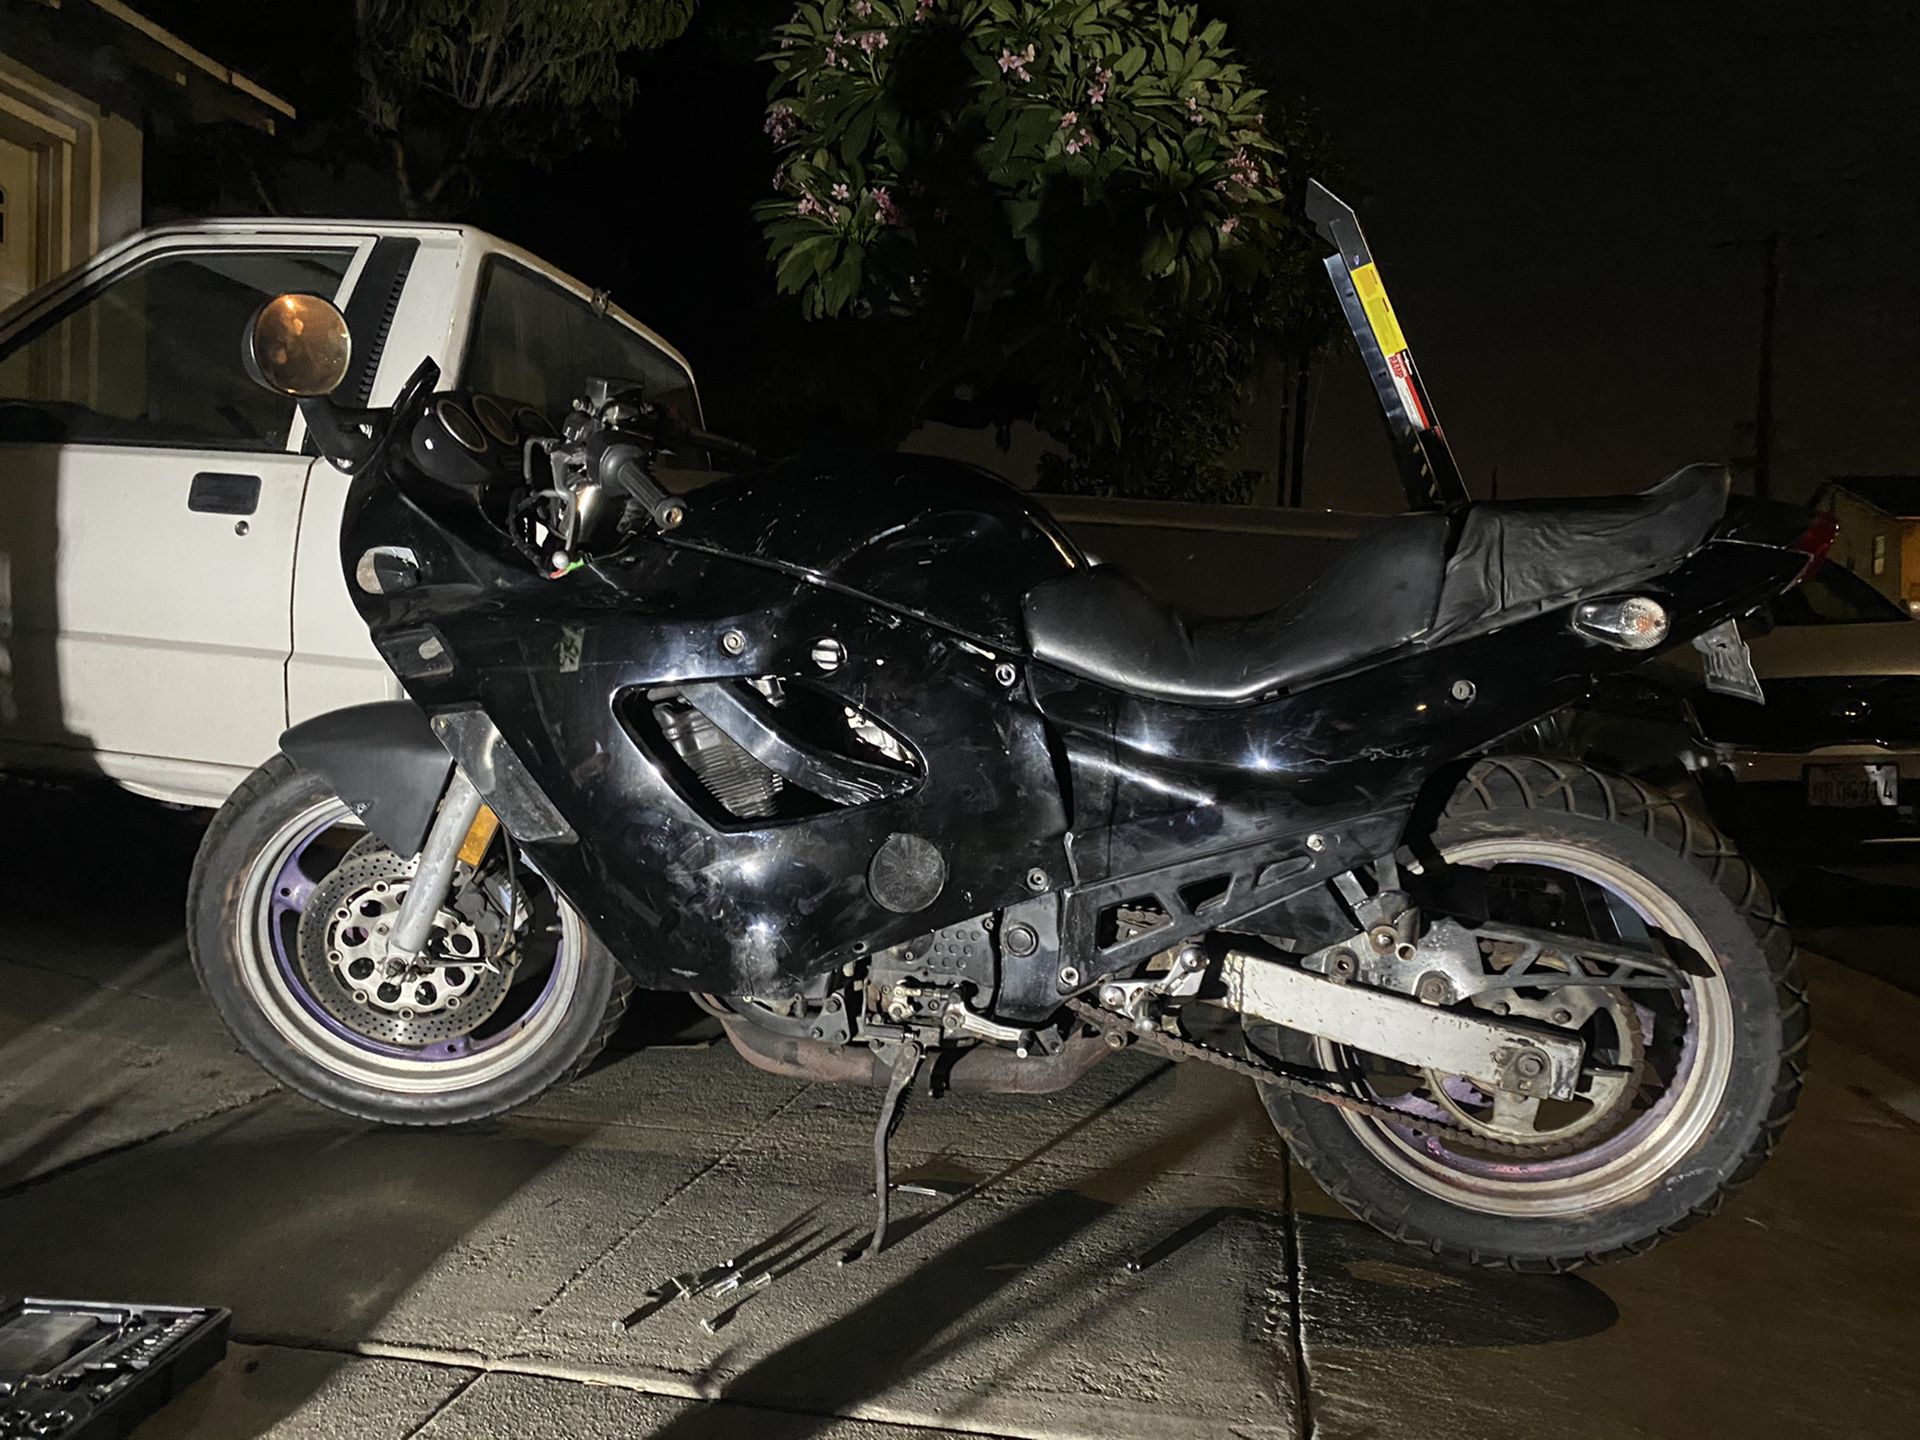 GSX600F Suzuki street bike katana motorcycle trades ok